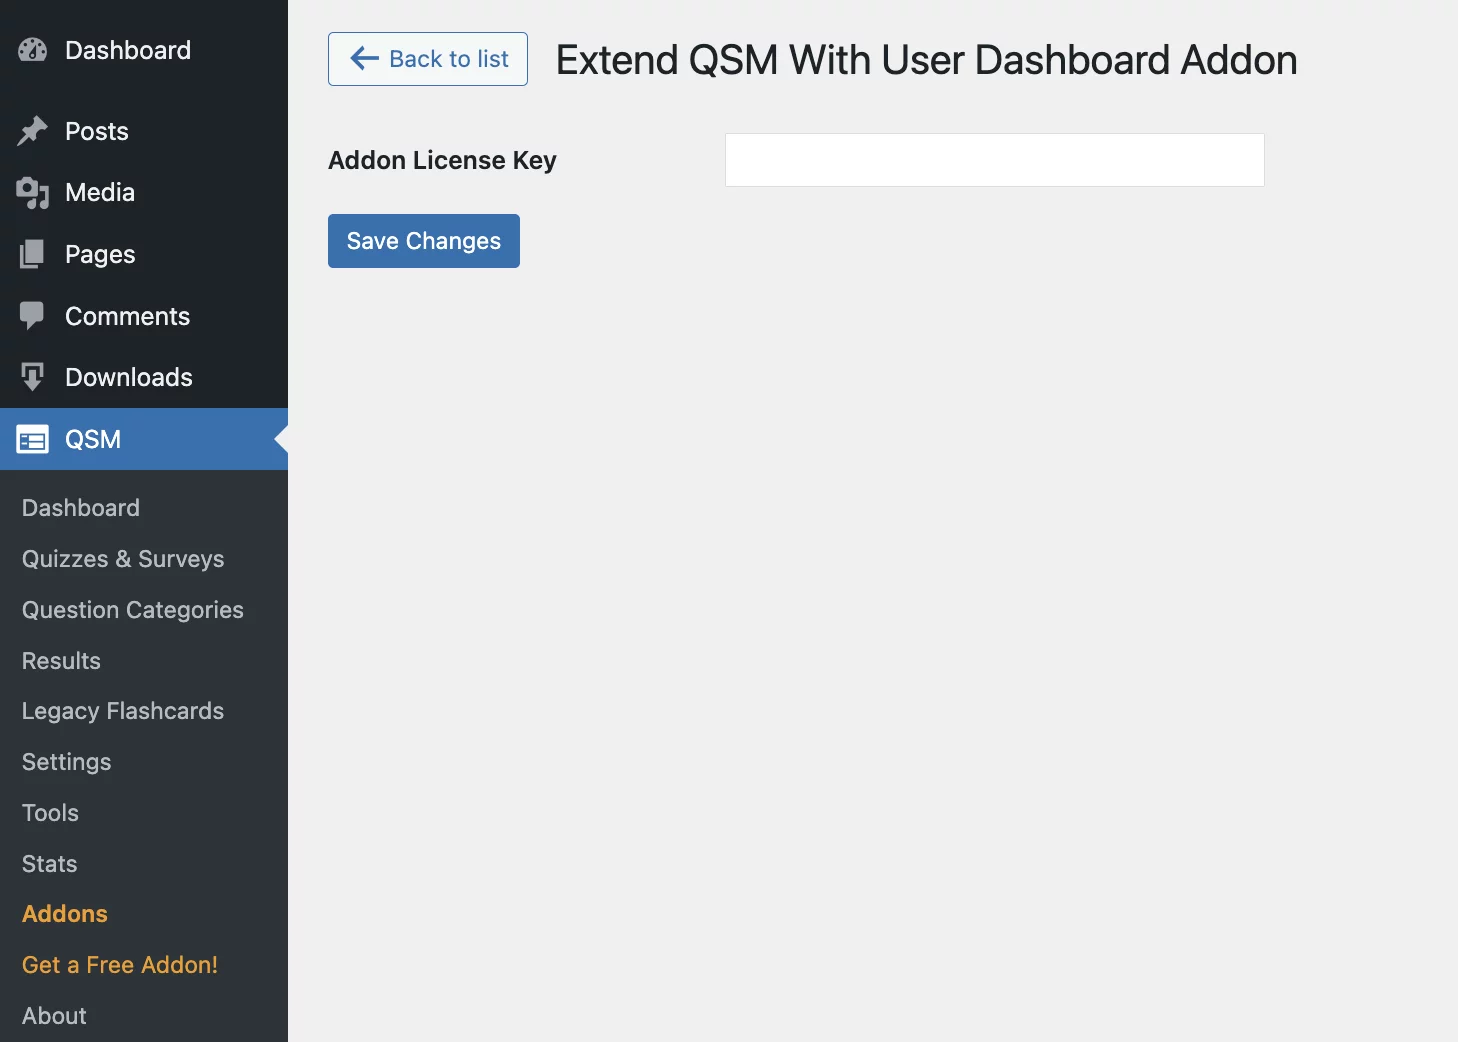 User dashboard addon - adding license key